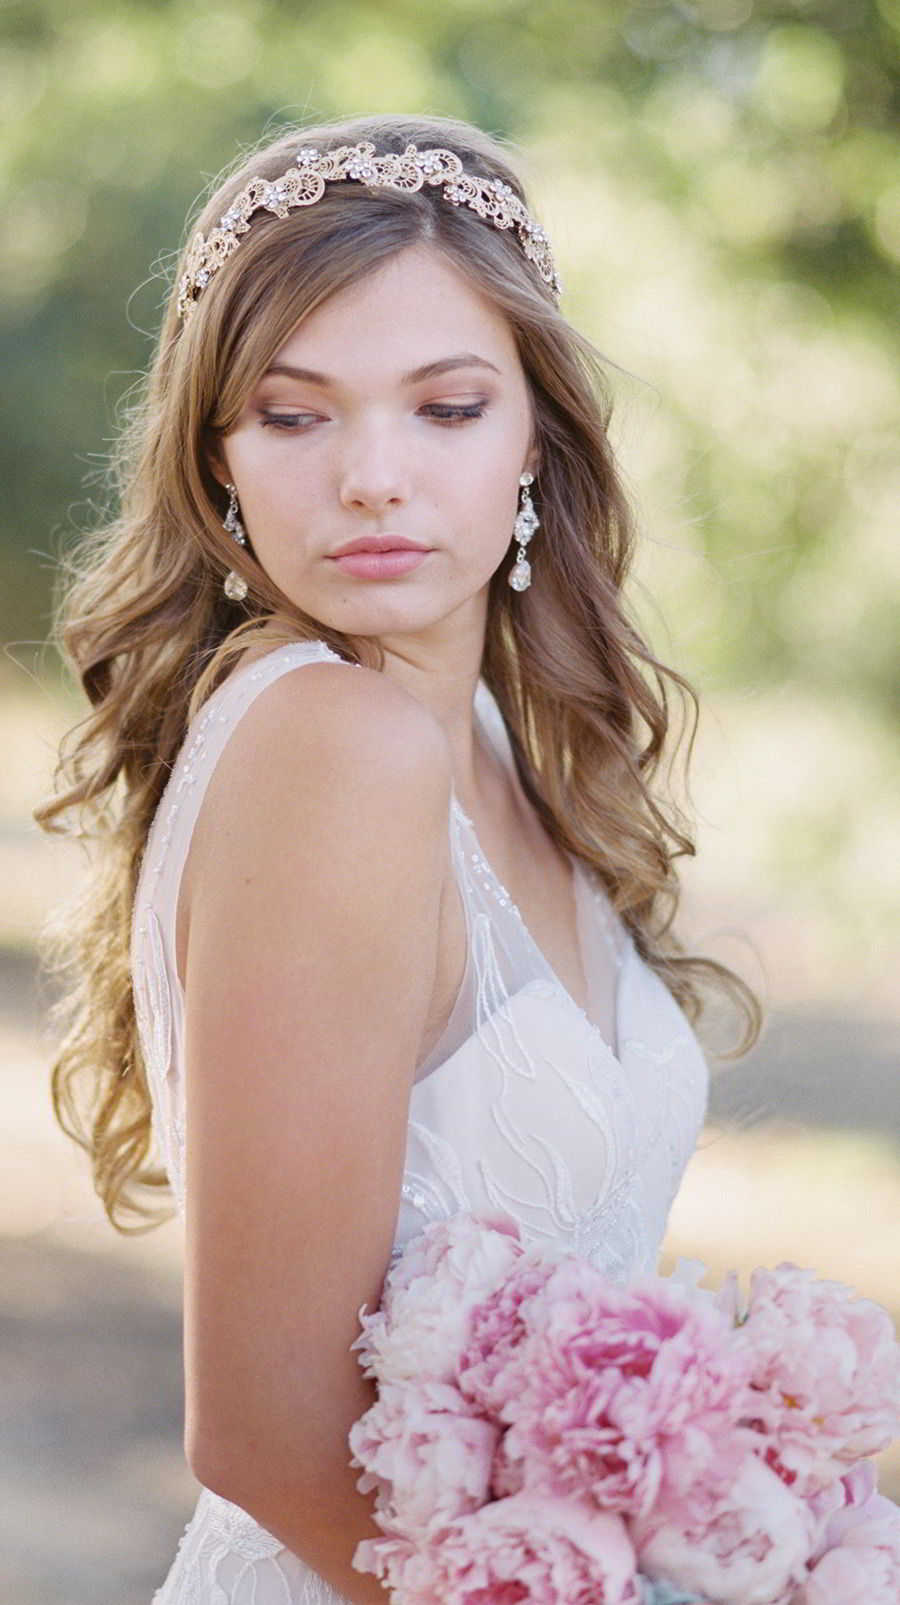 bel aire bridal accessories 6713 rustic gold headpiece rhinestone flowers drop earrings romantic wedding dress side.